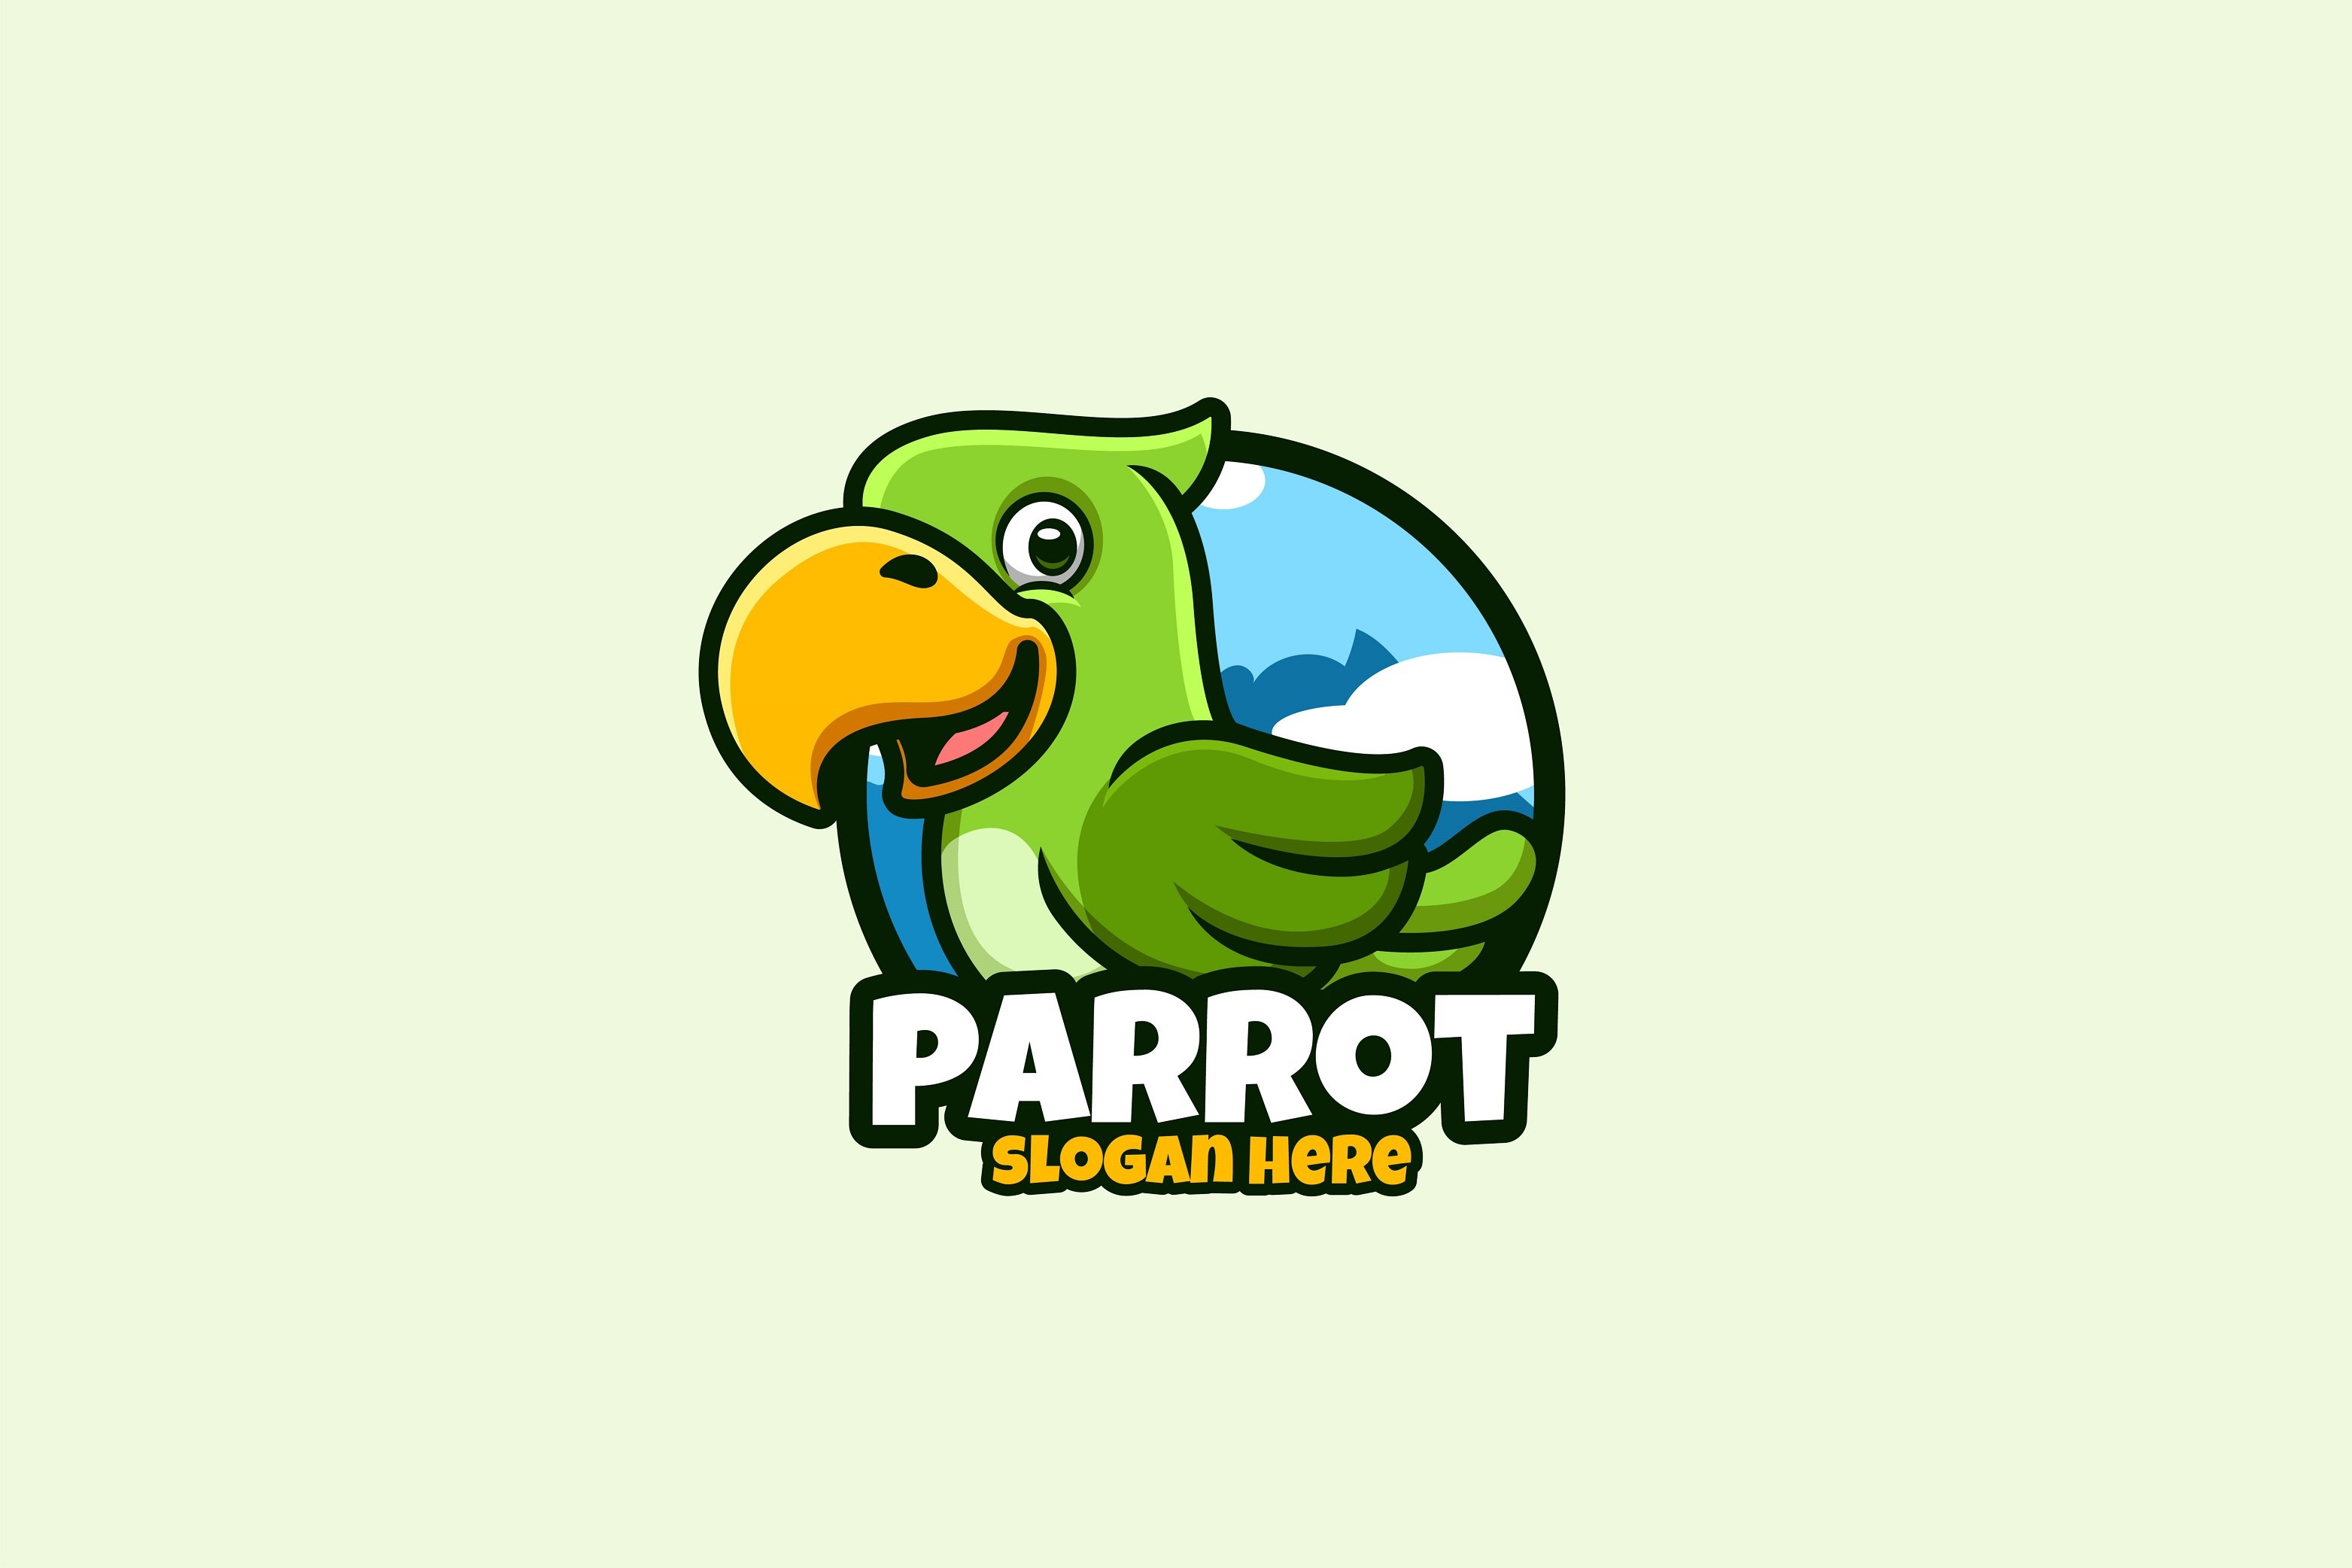 Cute Parrot Cartoon Logo cover image.